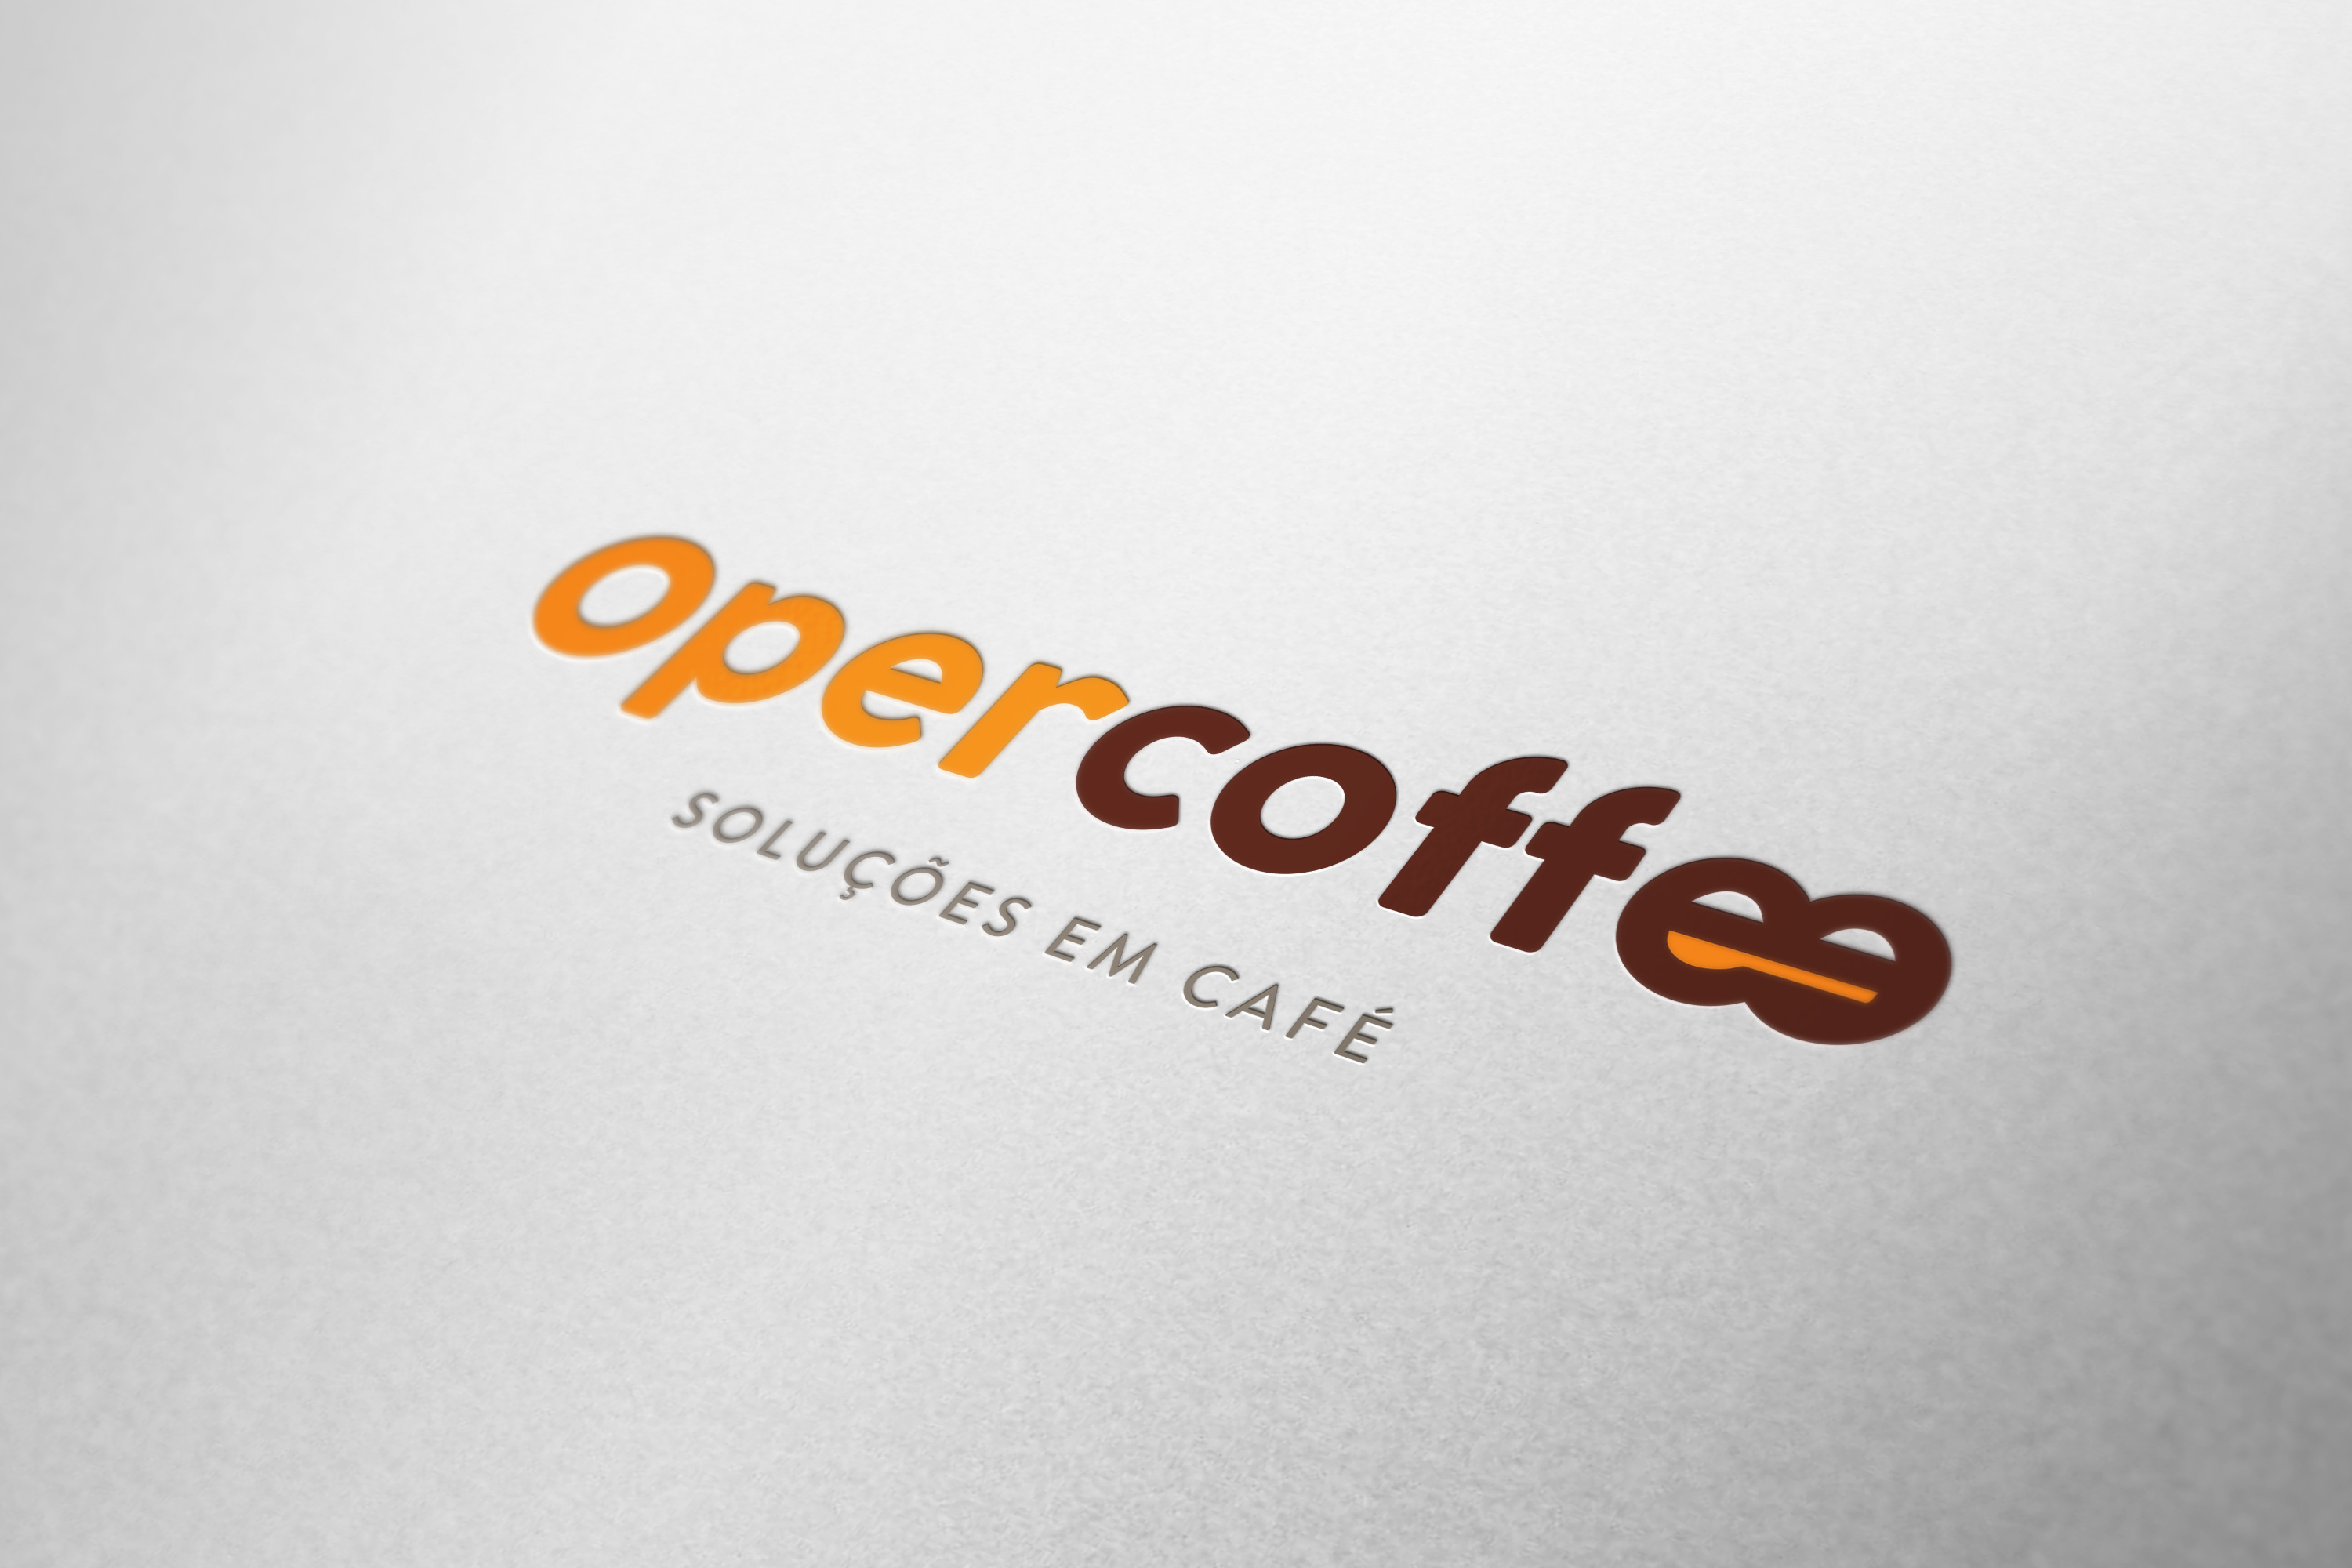 opercoffee-logo